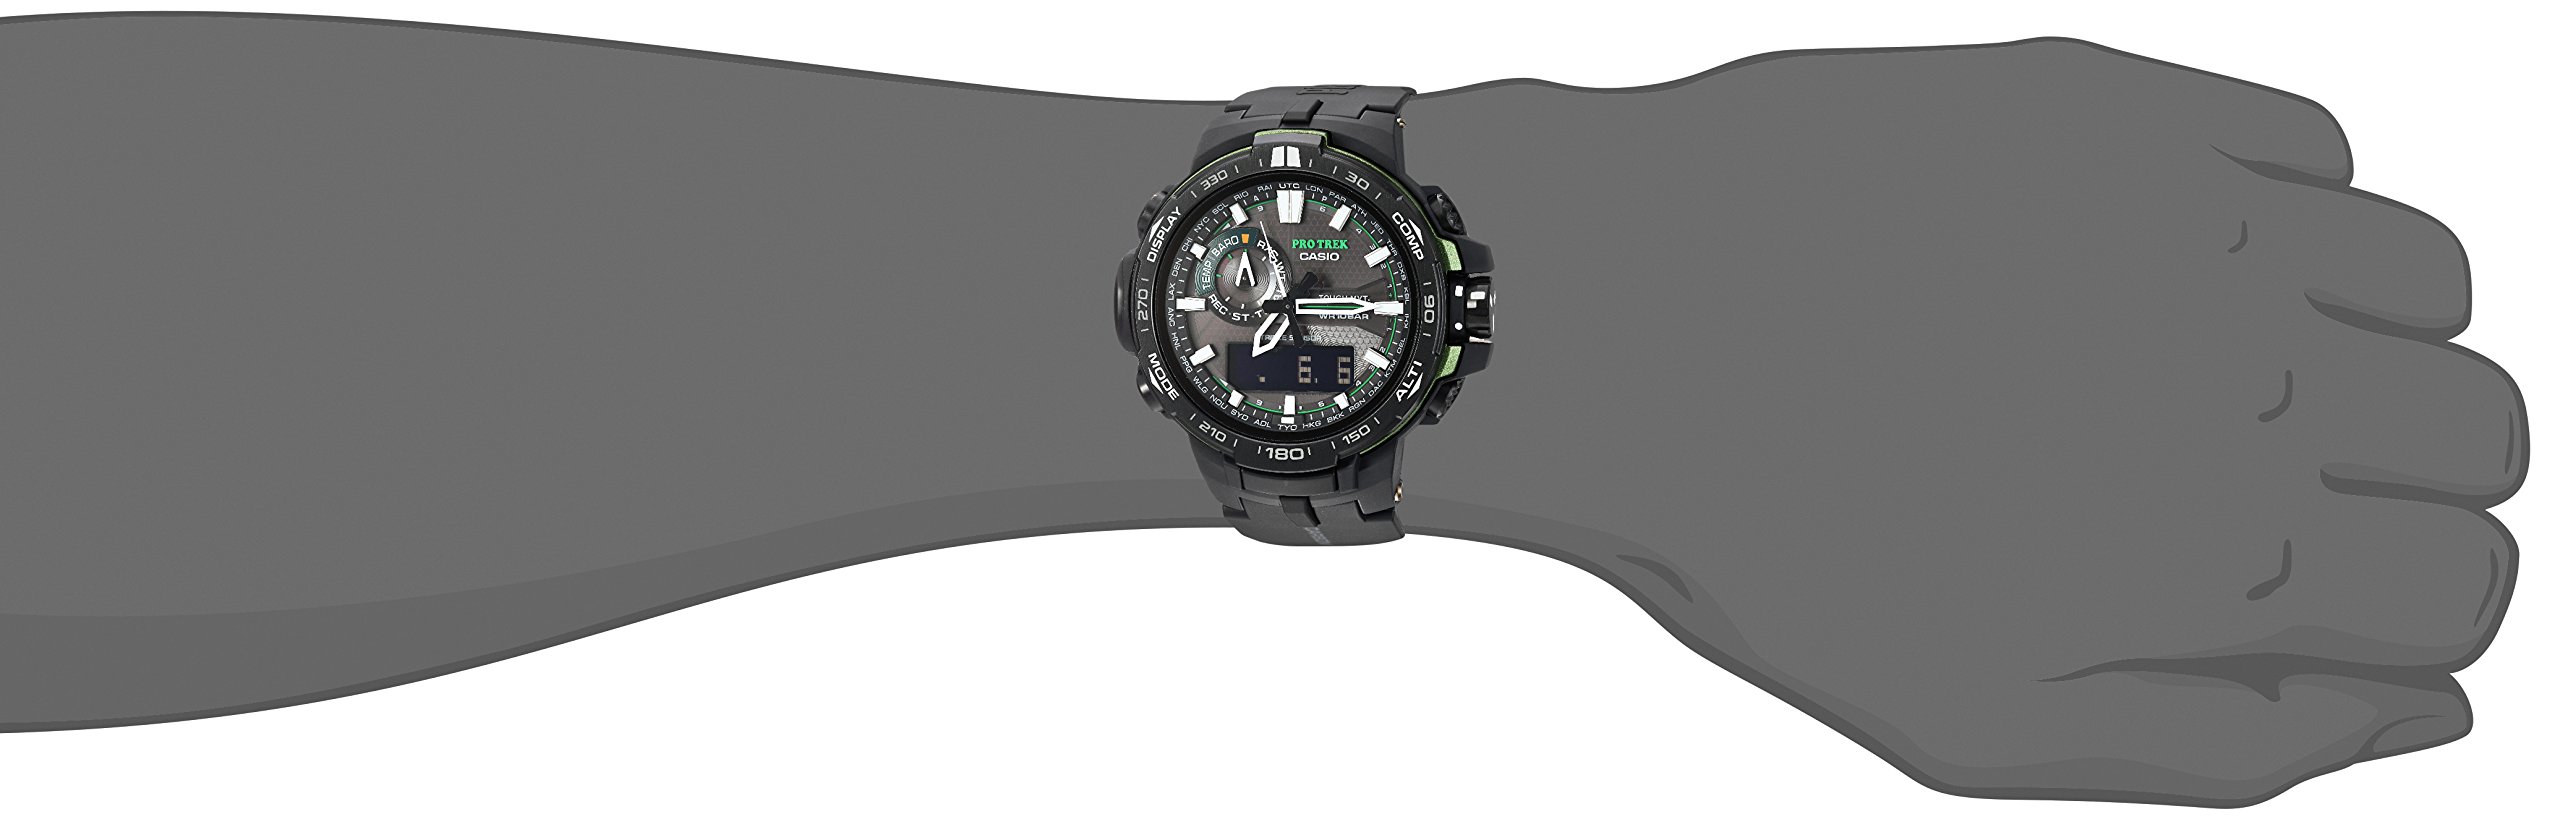 Casio Protrek PRW6000Y-1A Atomic Solar Wristwatch